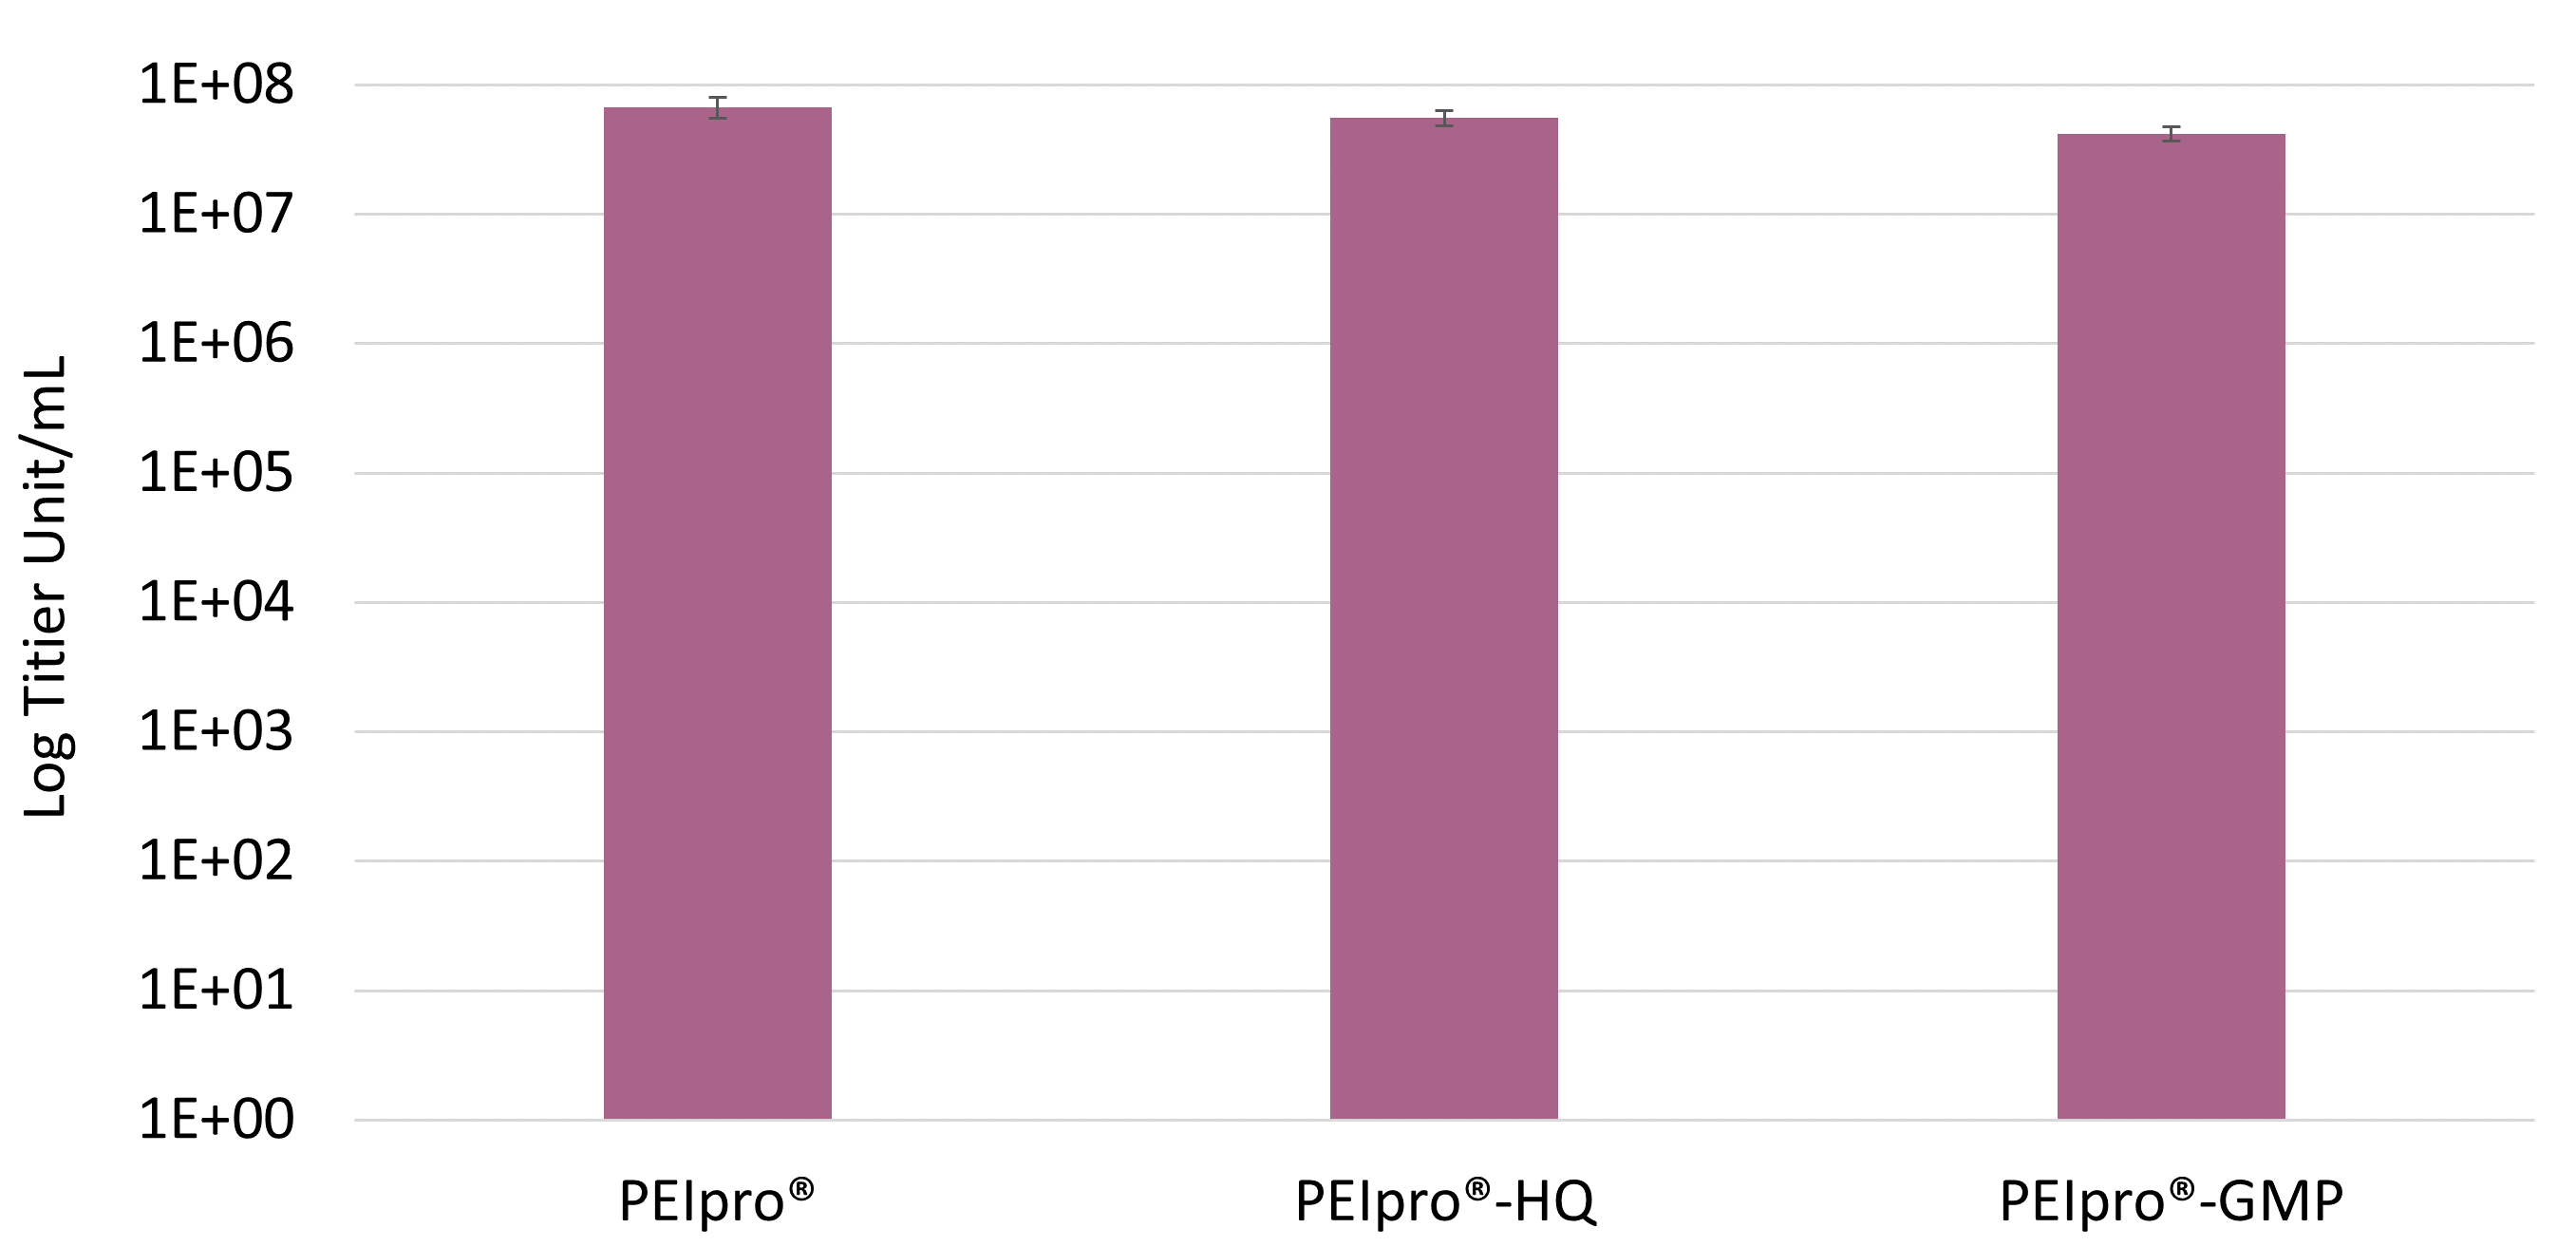 PEIpro-HQ - Manufaturing process